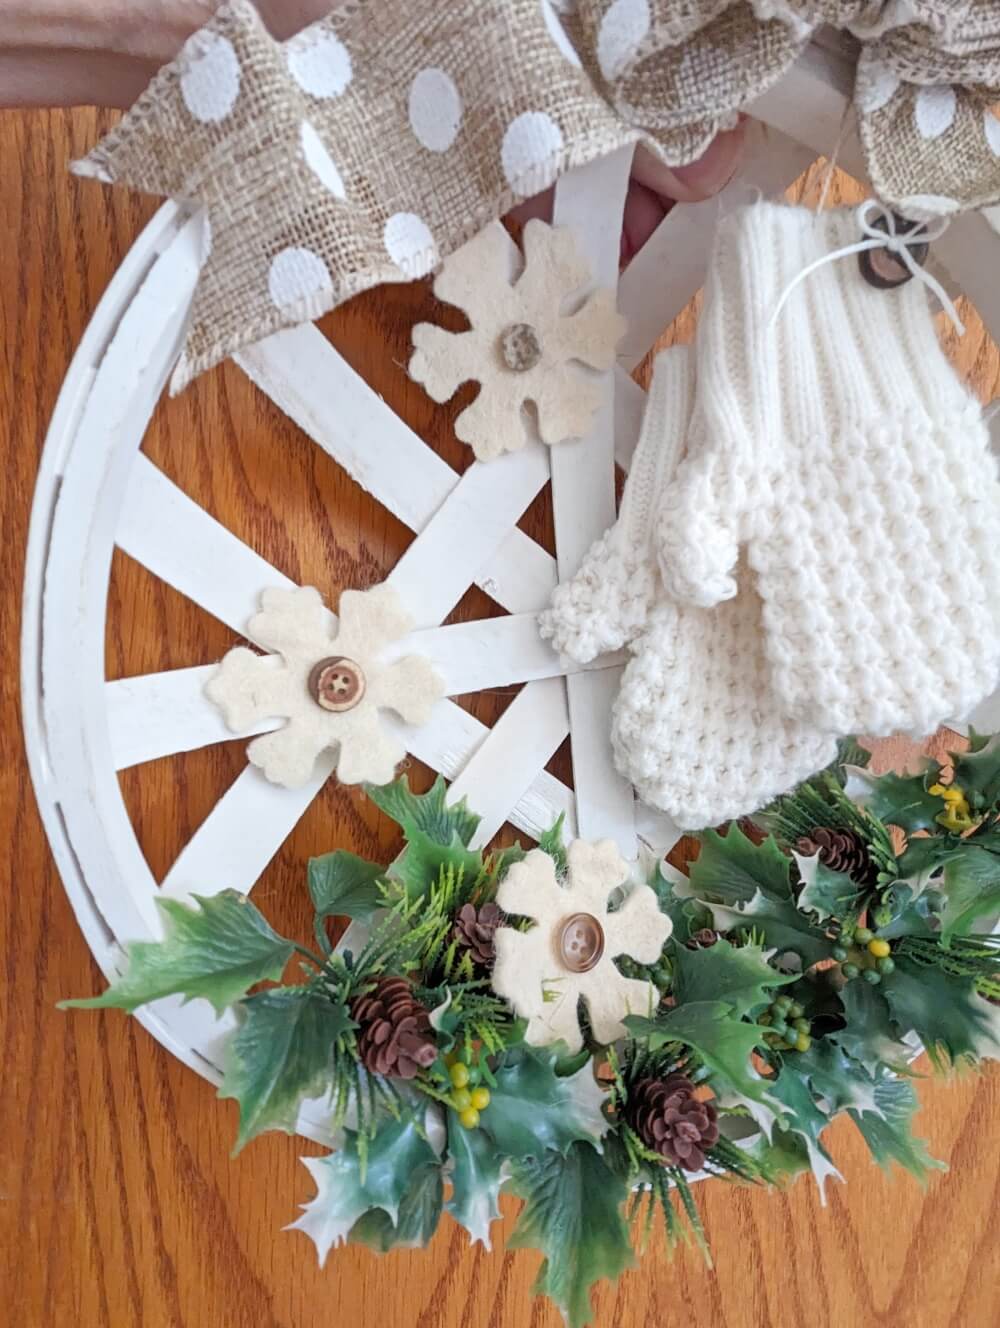 Repurposed Basket Winter Wreath